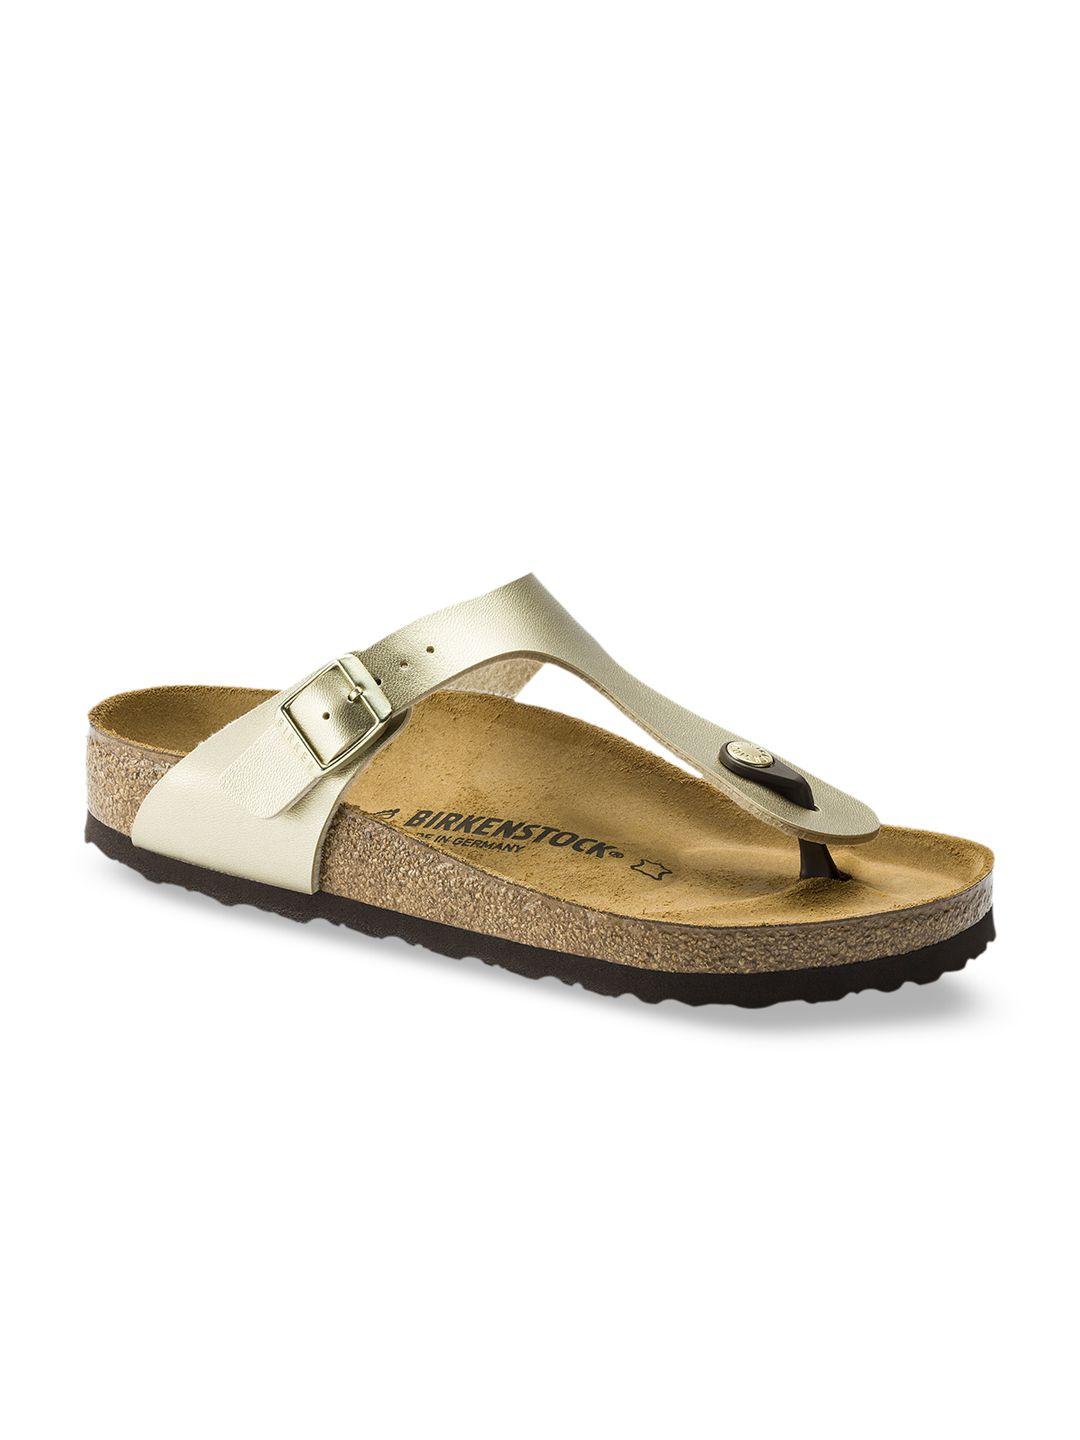 birkenstock unisex gold-toned gizeh birko-flor regular width sandals